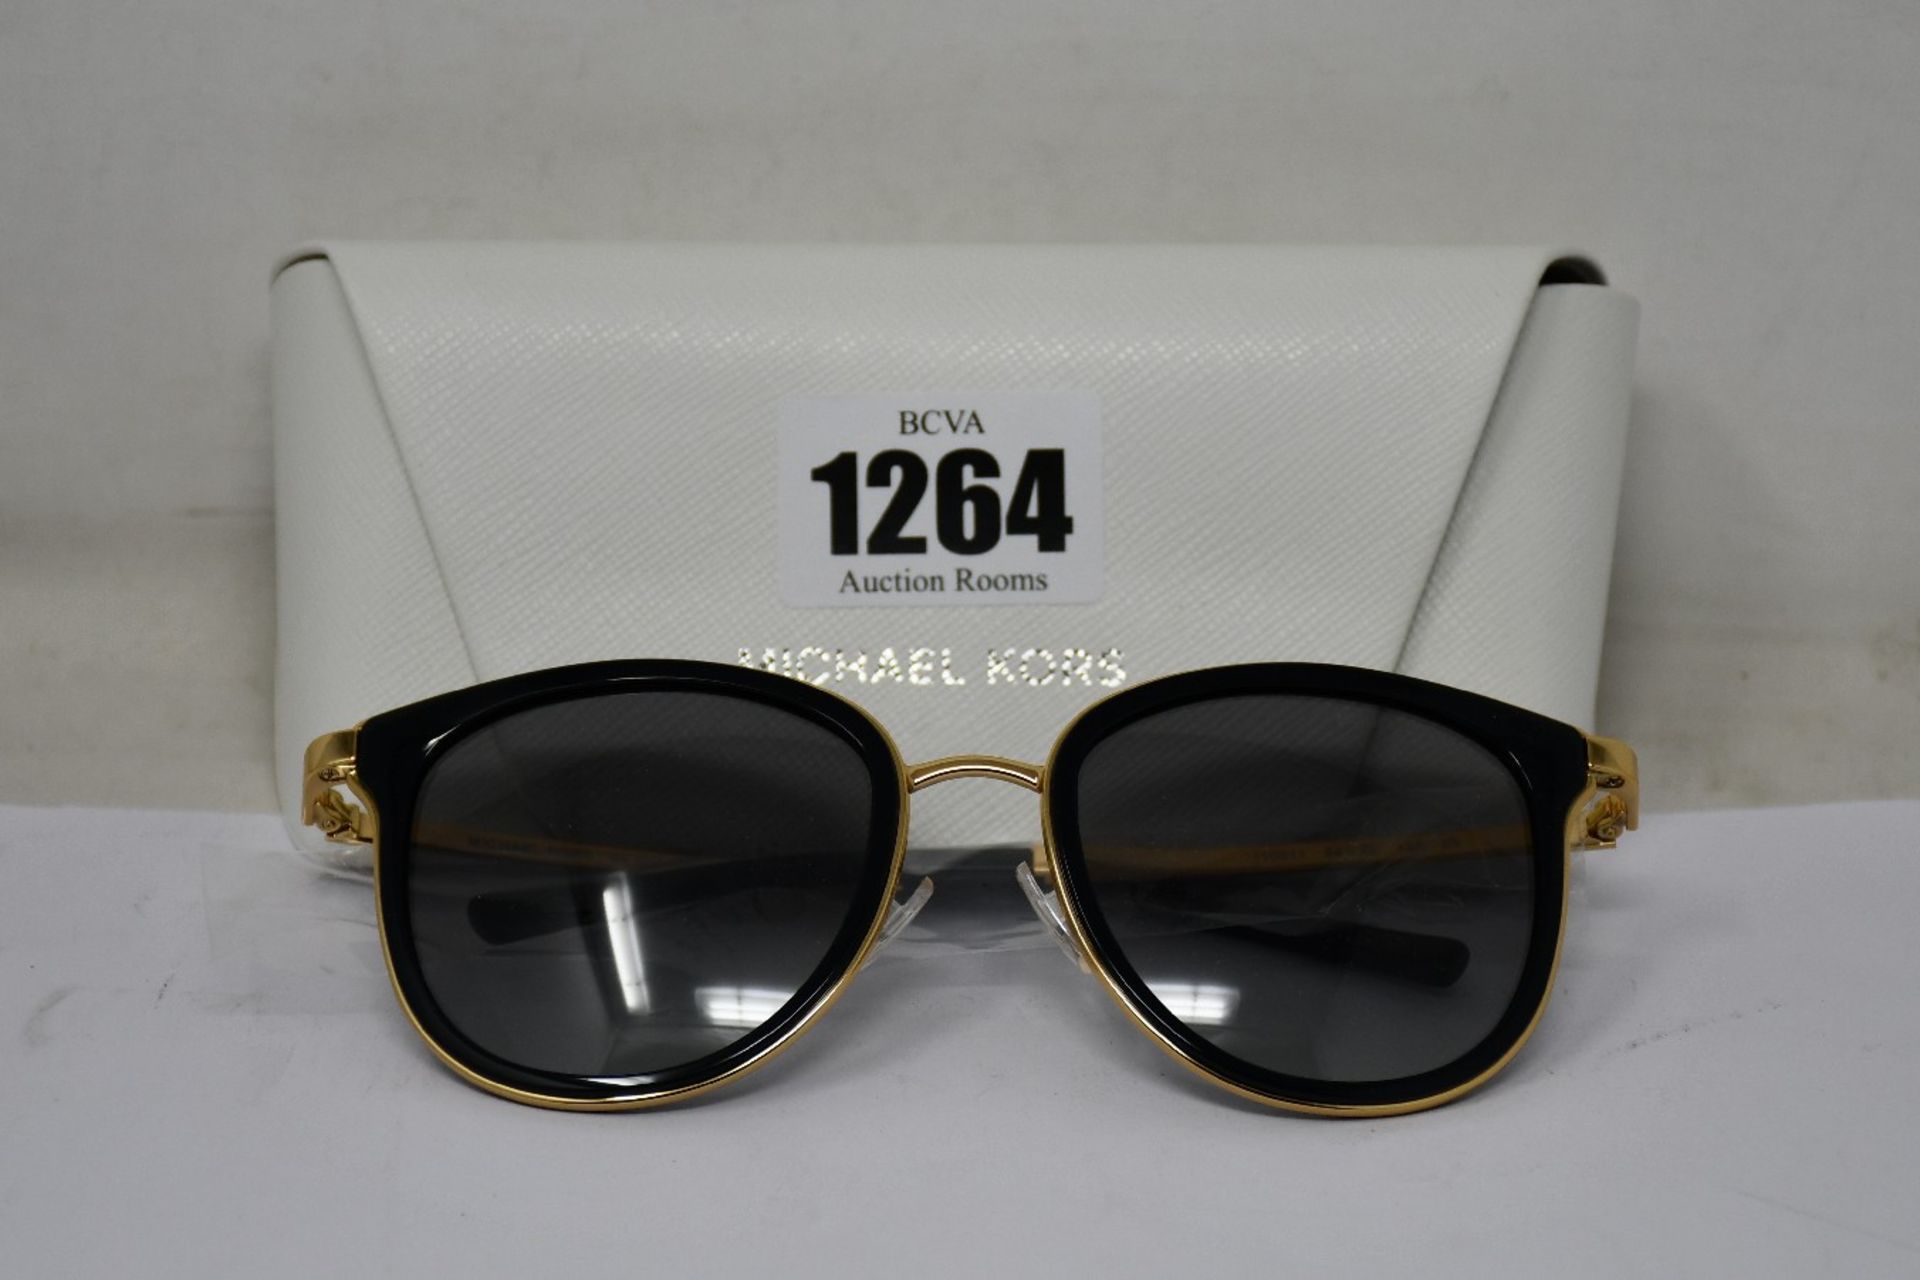 A pair of as new Michael Kors sunglasses.